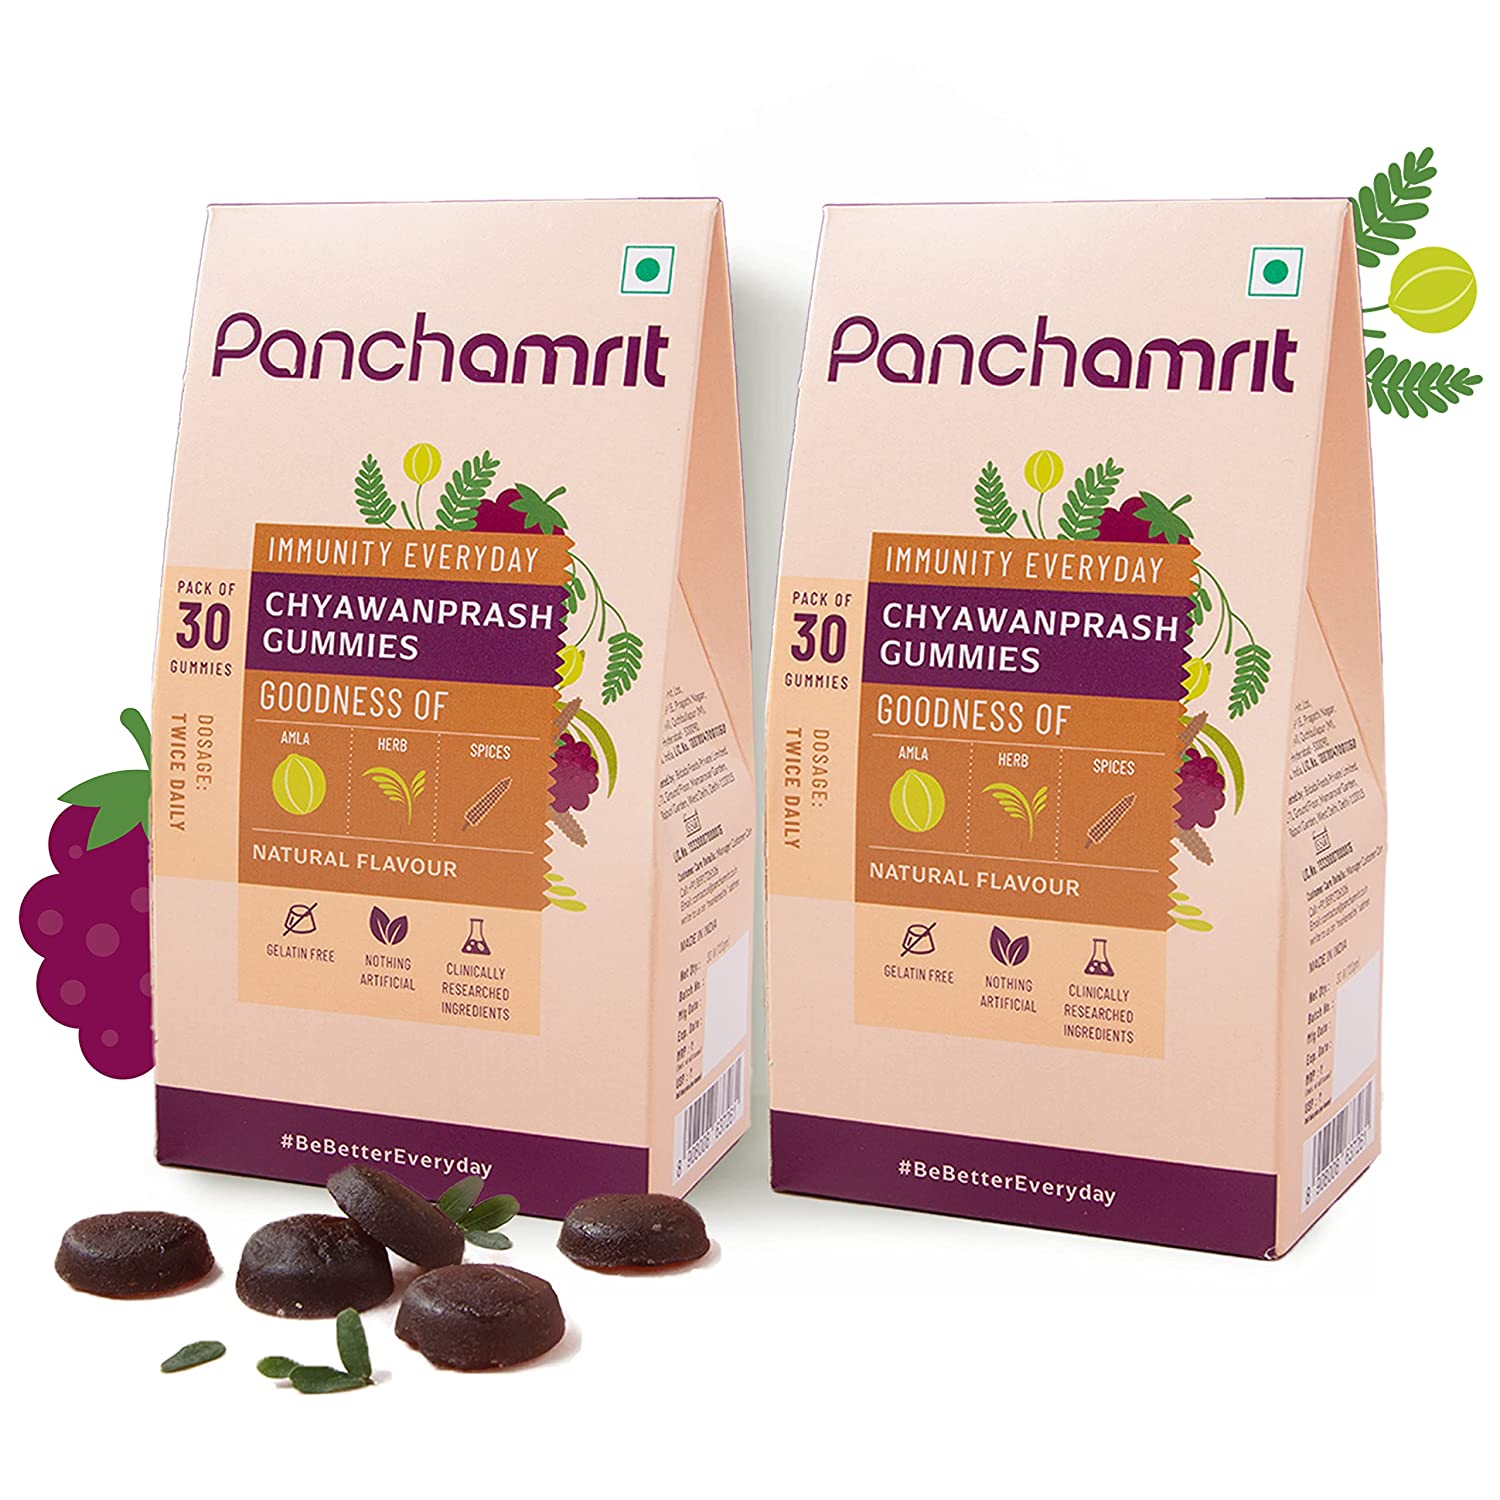 Panchamrit Chyawanprash Gummies